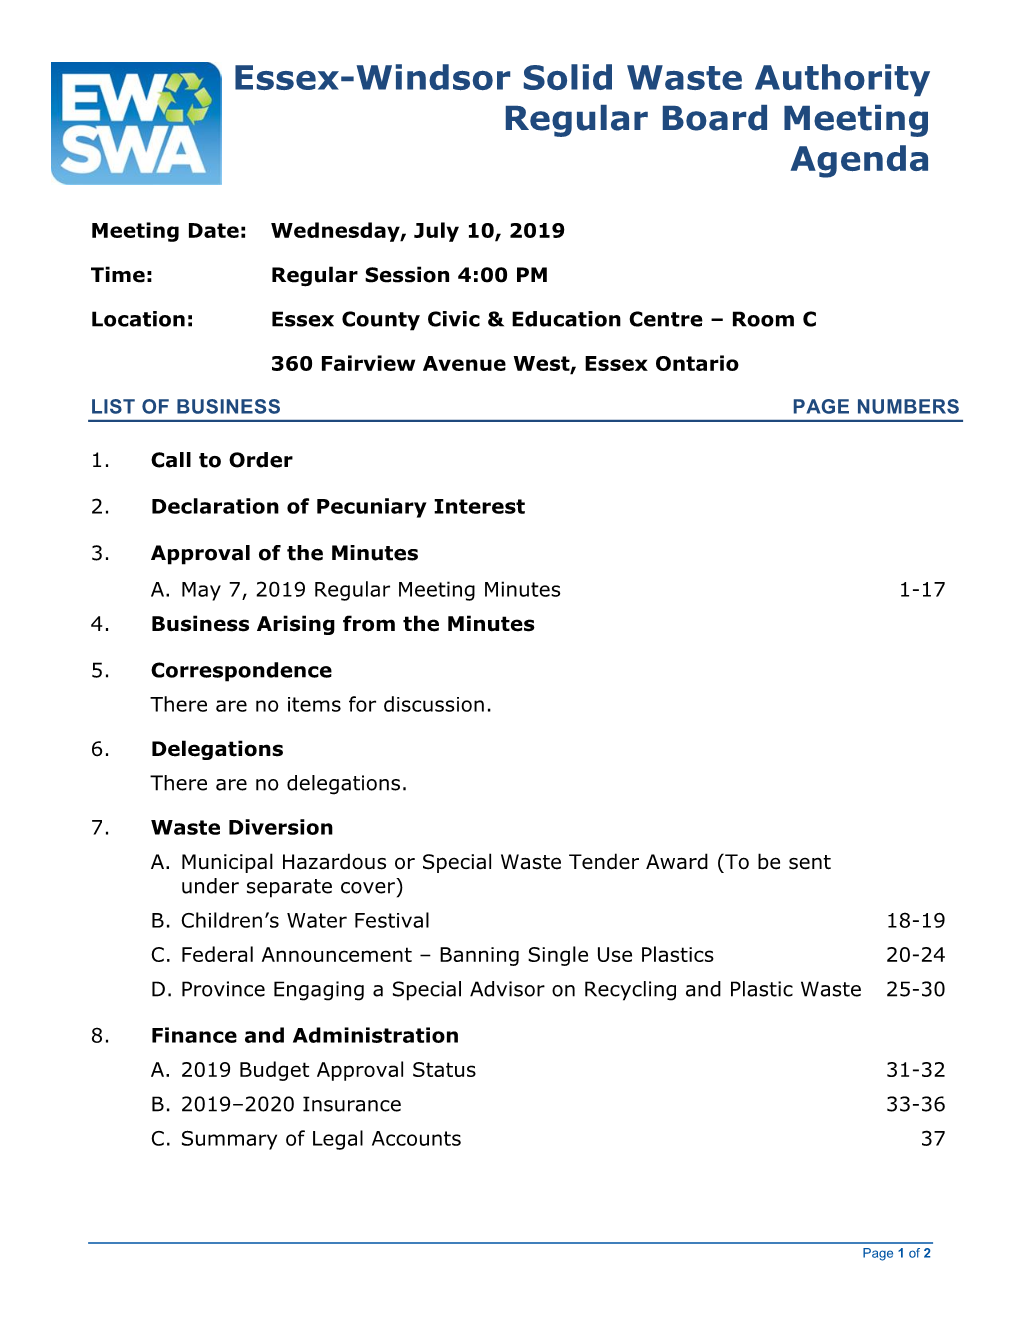 Essex-Windsor Solid Waste Authority Regular Board Meeting Agenda